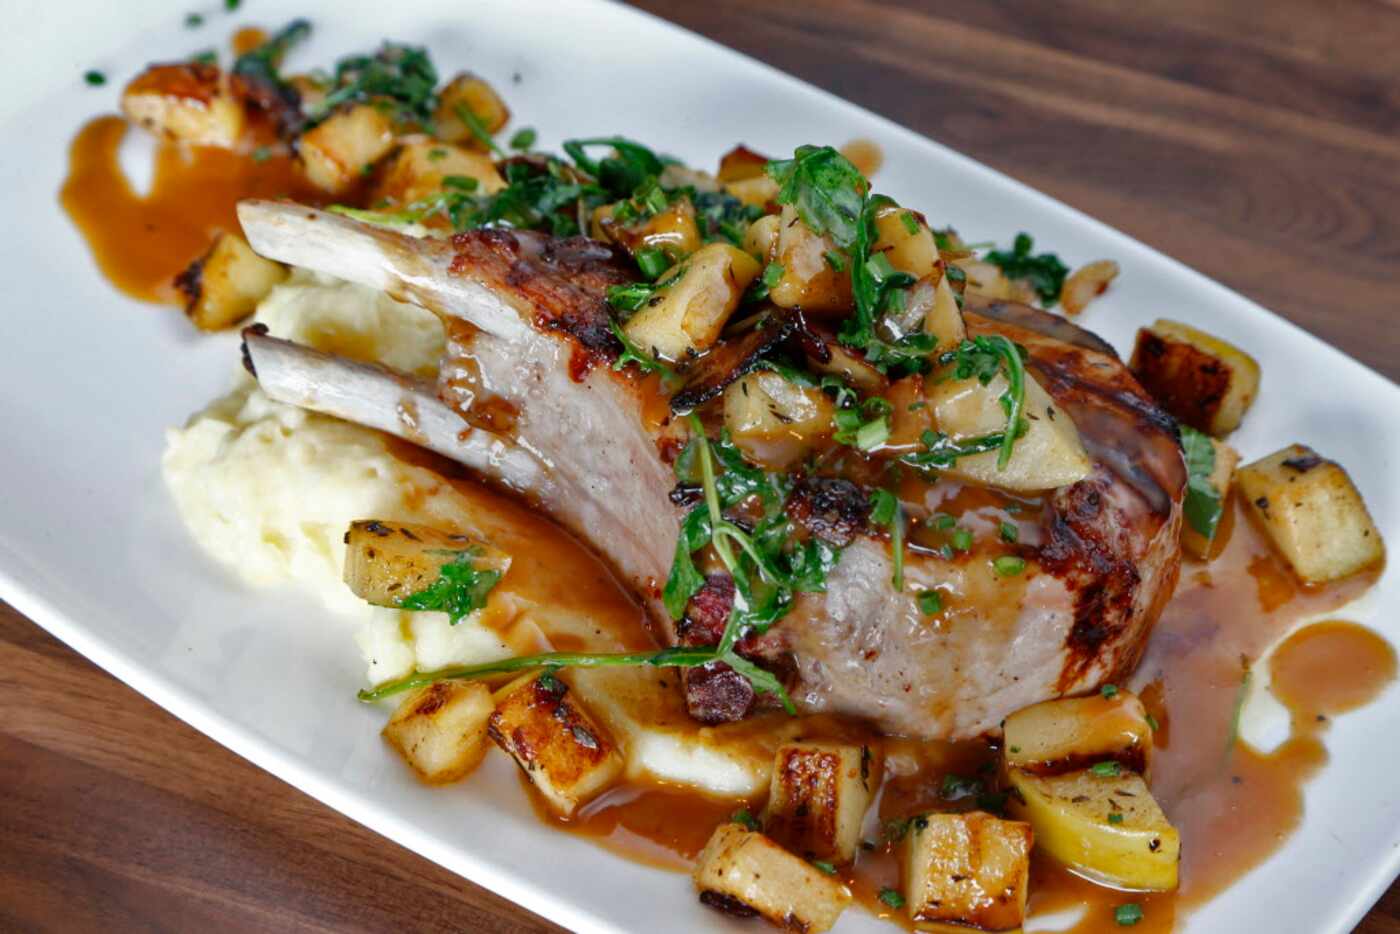 A bourbon-marinated pork chop on mashed potatoes, smothered with arugula-laced ragu of...